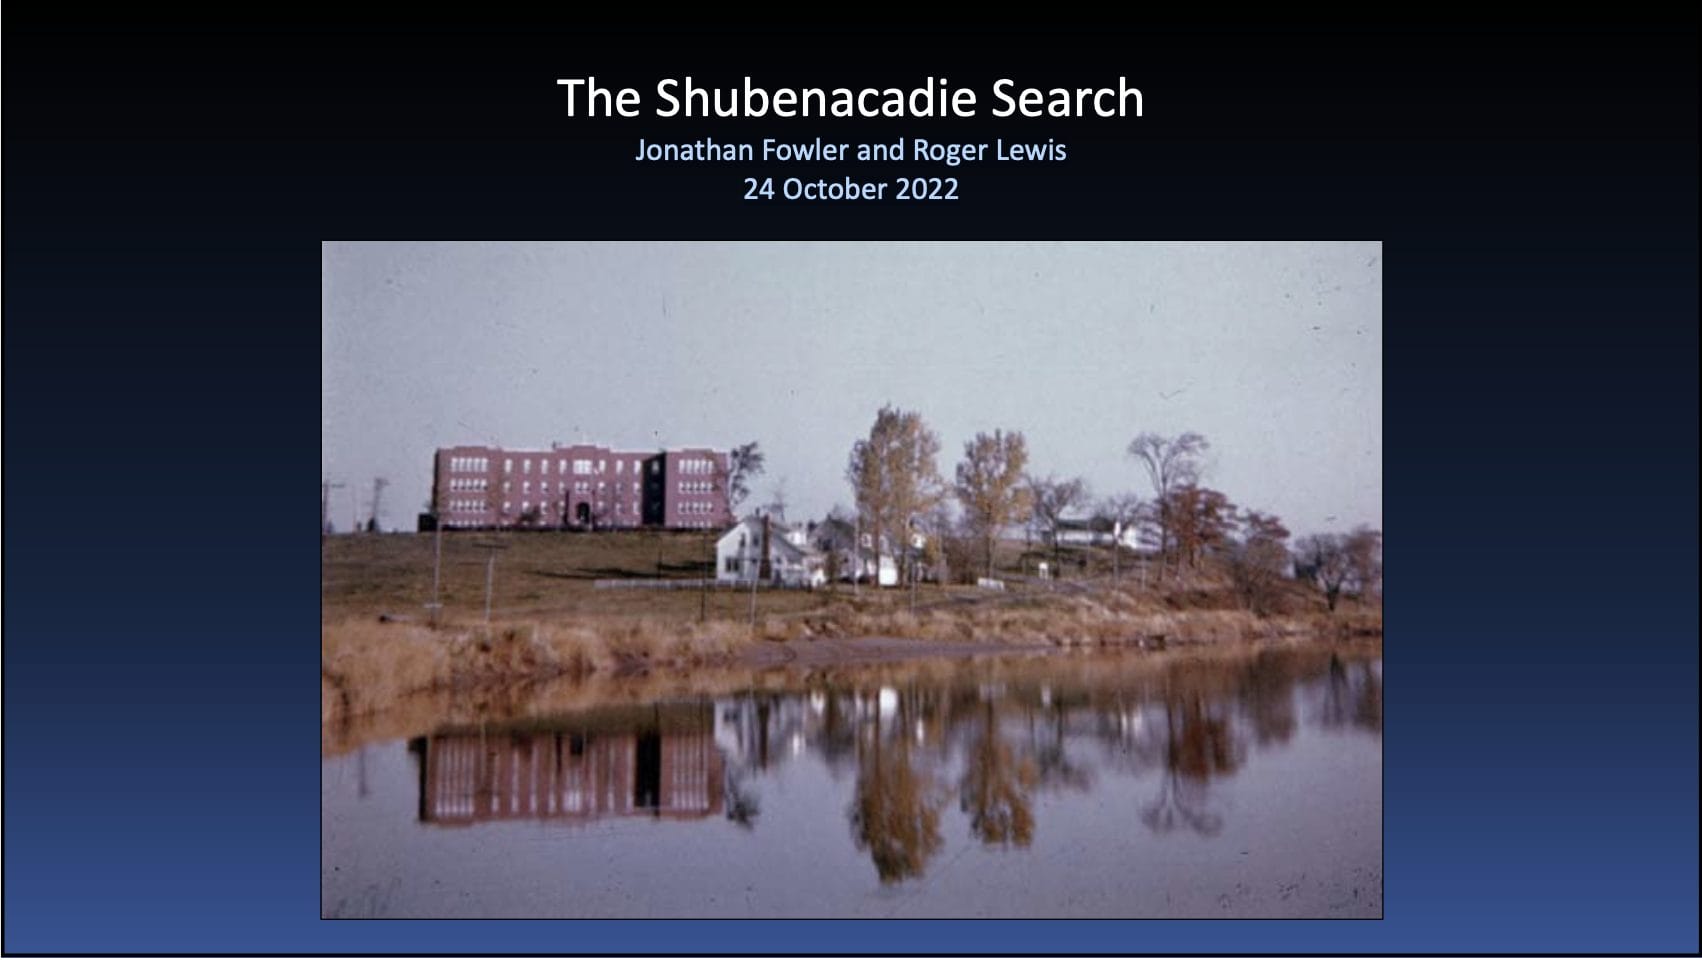  The Shubenacadie Search